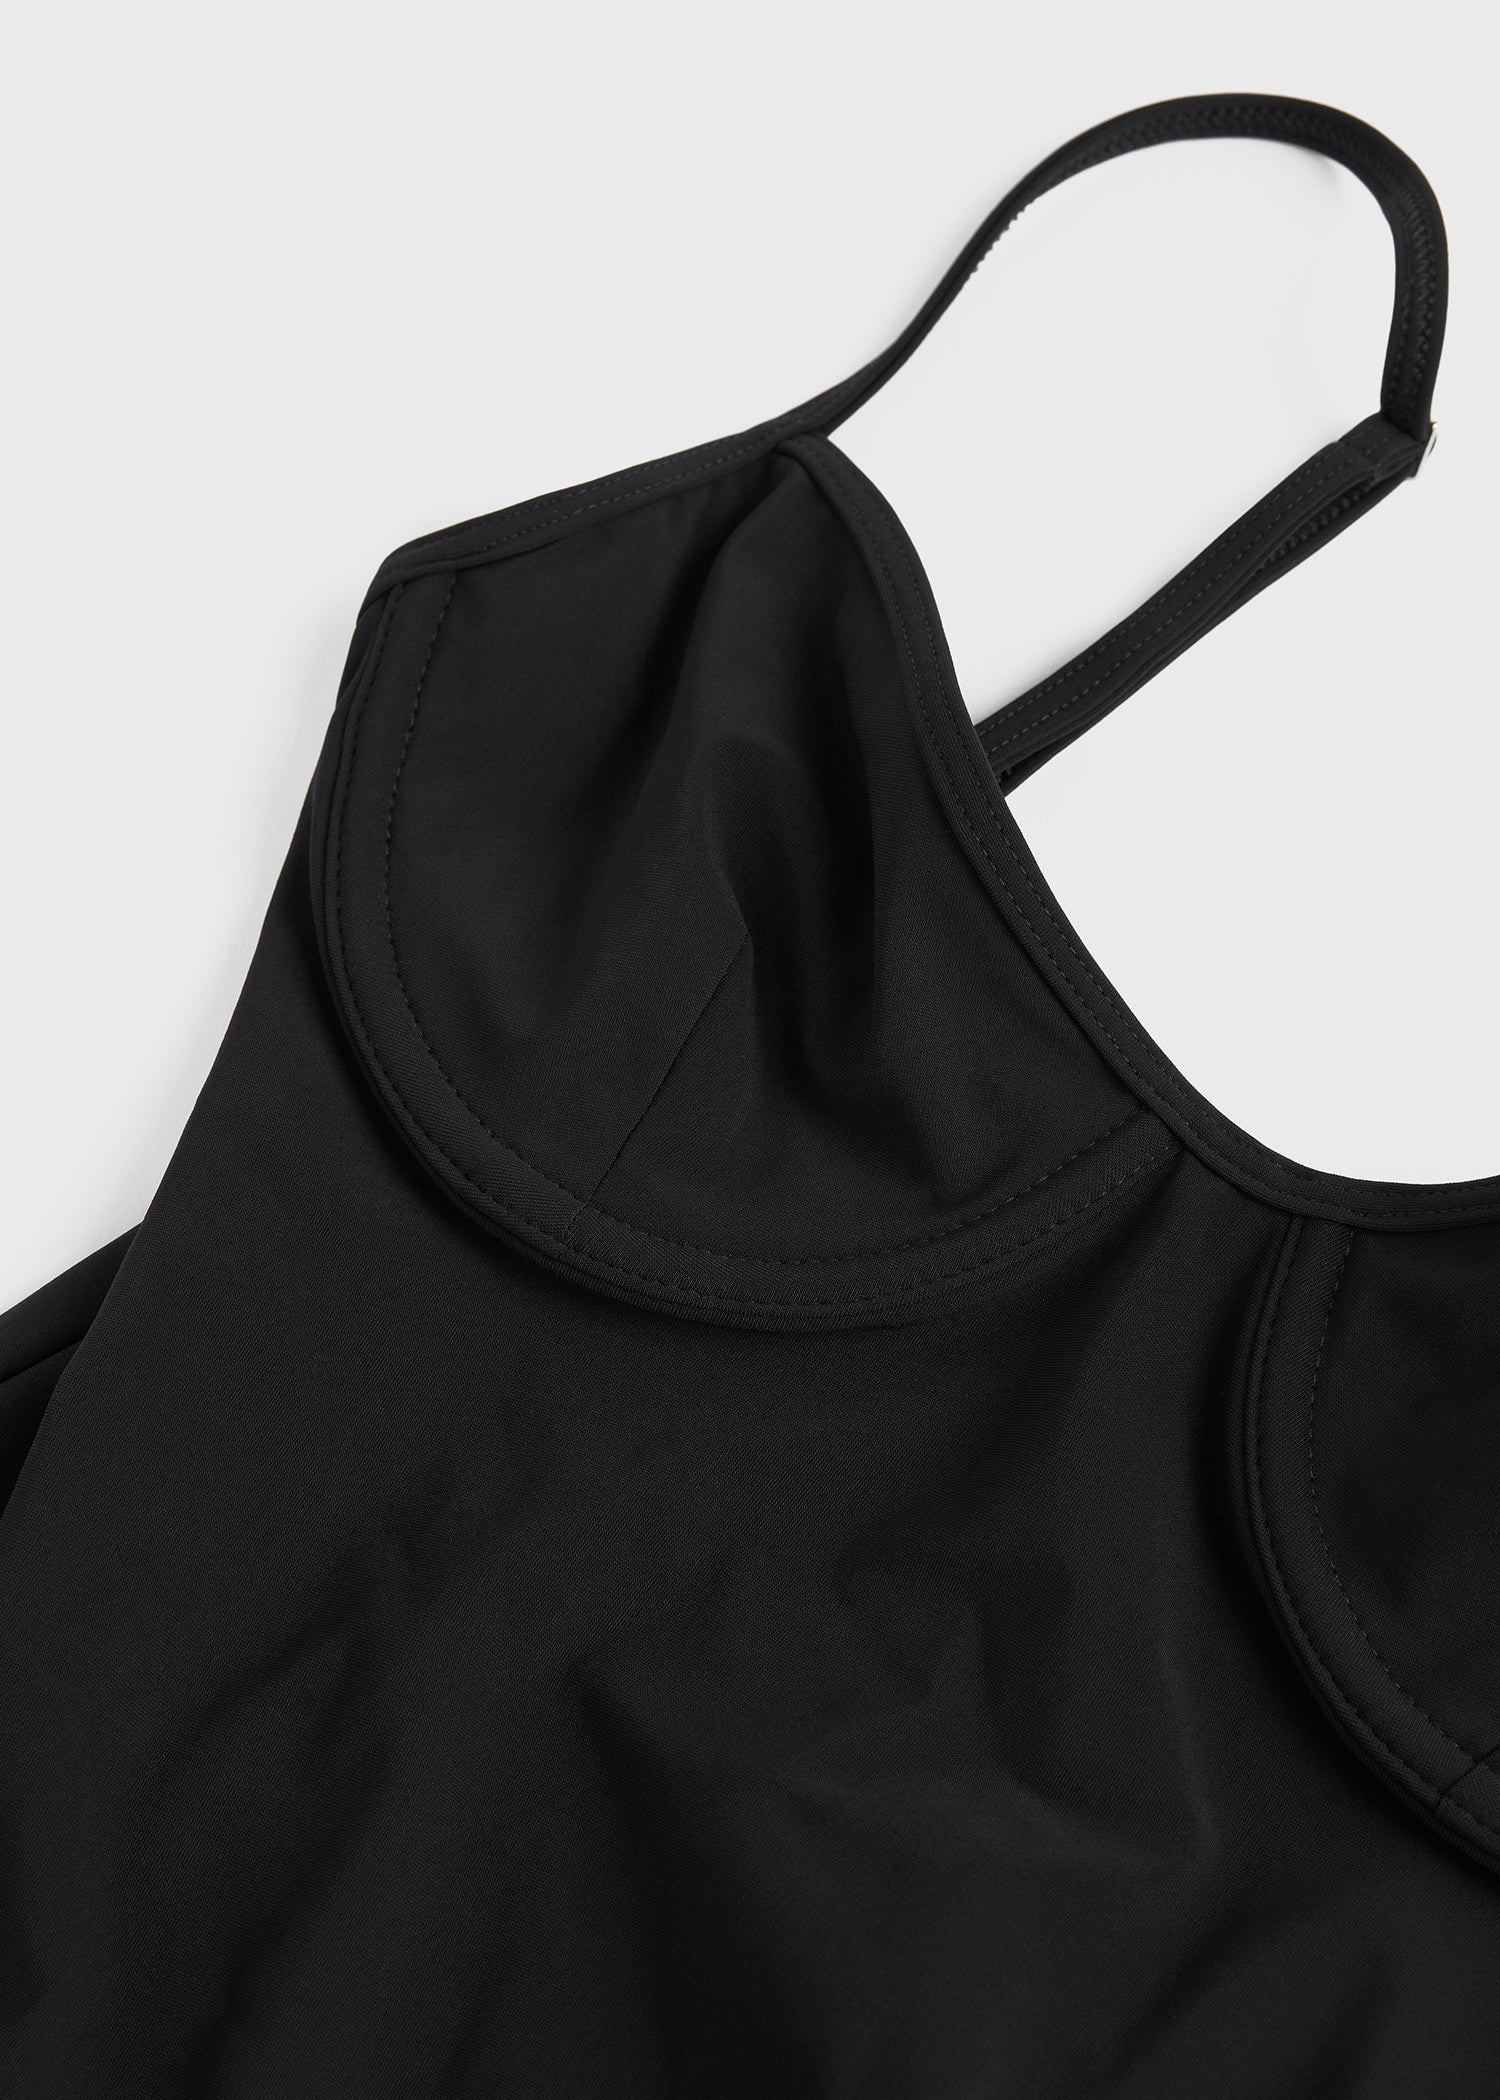 Half-cup swimsuit black - 6